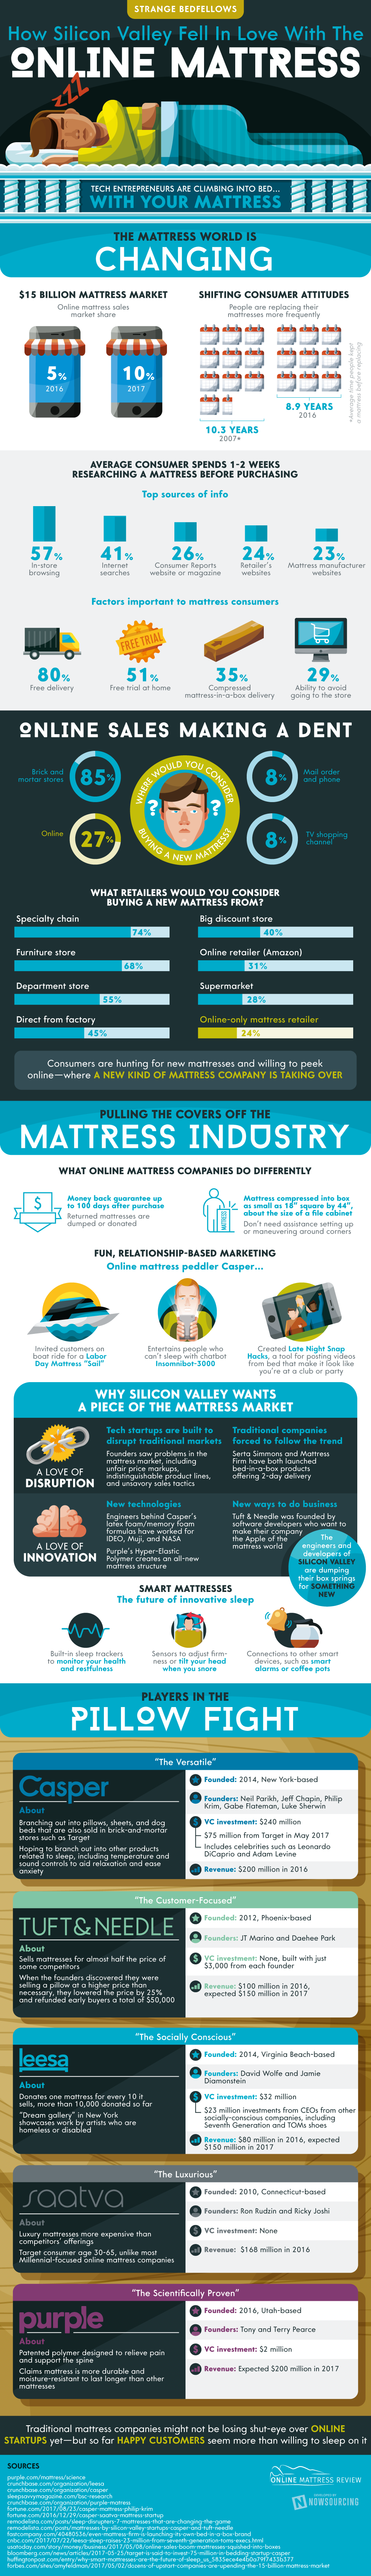 sb sv online mattresses